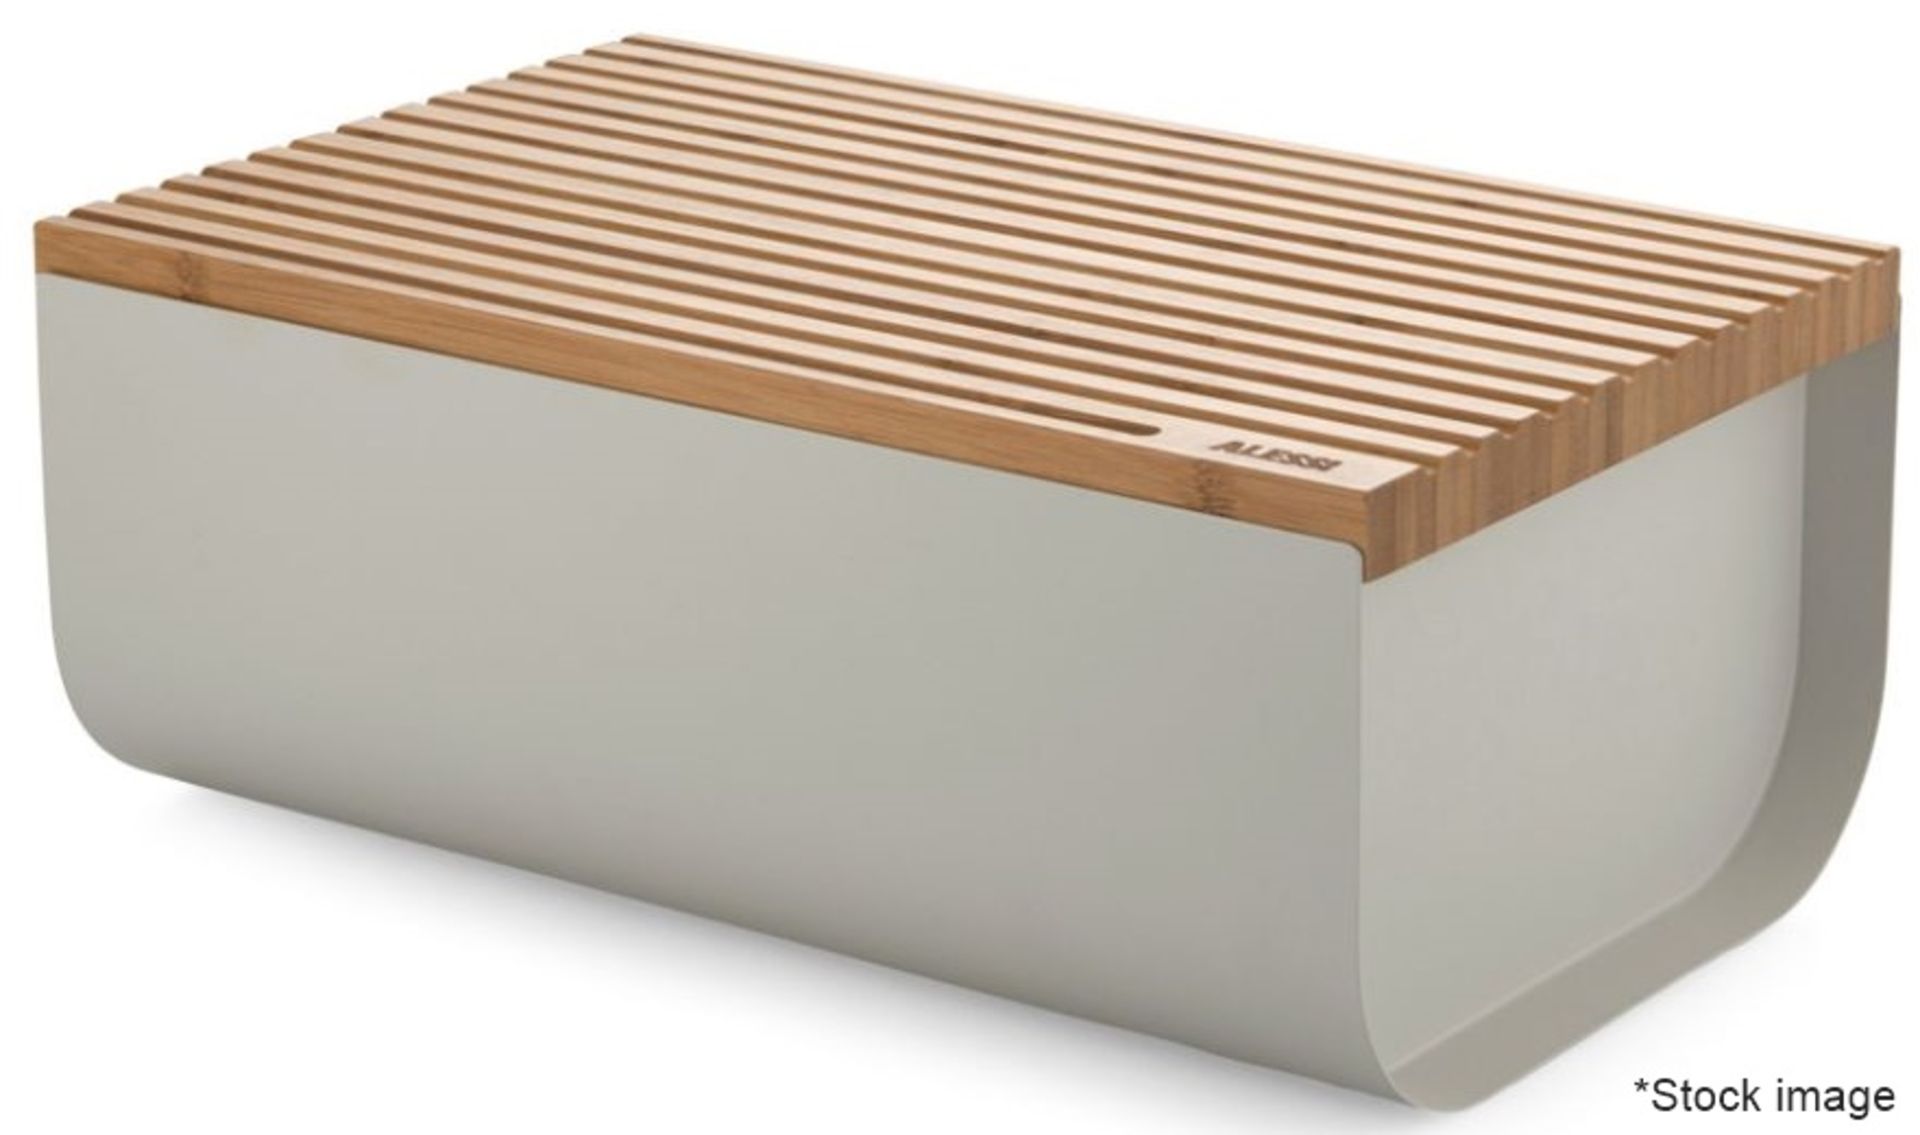 1 x ALESSI 'Mattina' Designer Bread Box (34cm) - £110.00 - Unused Boxed Stock